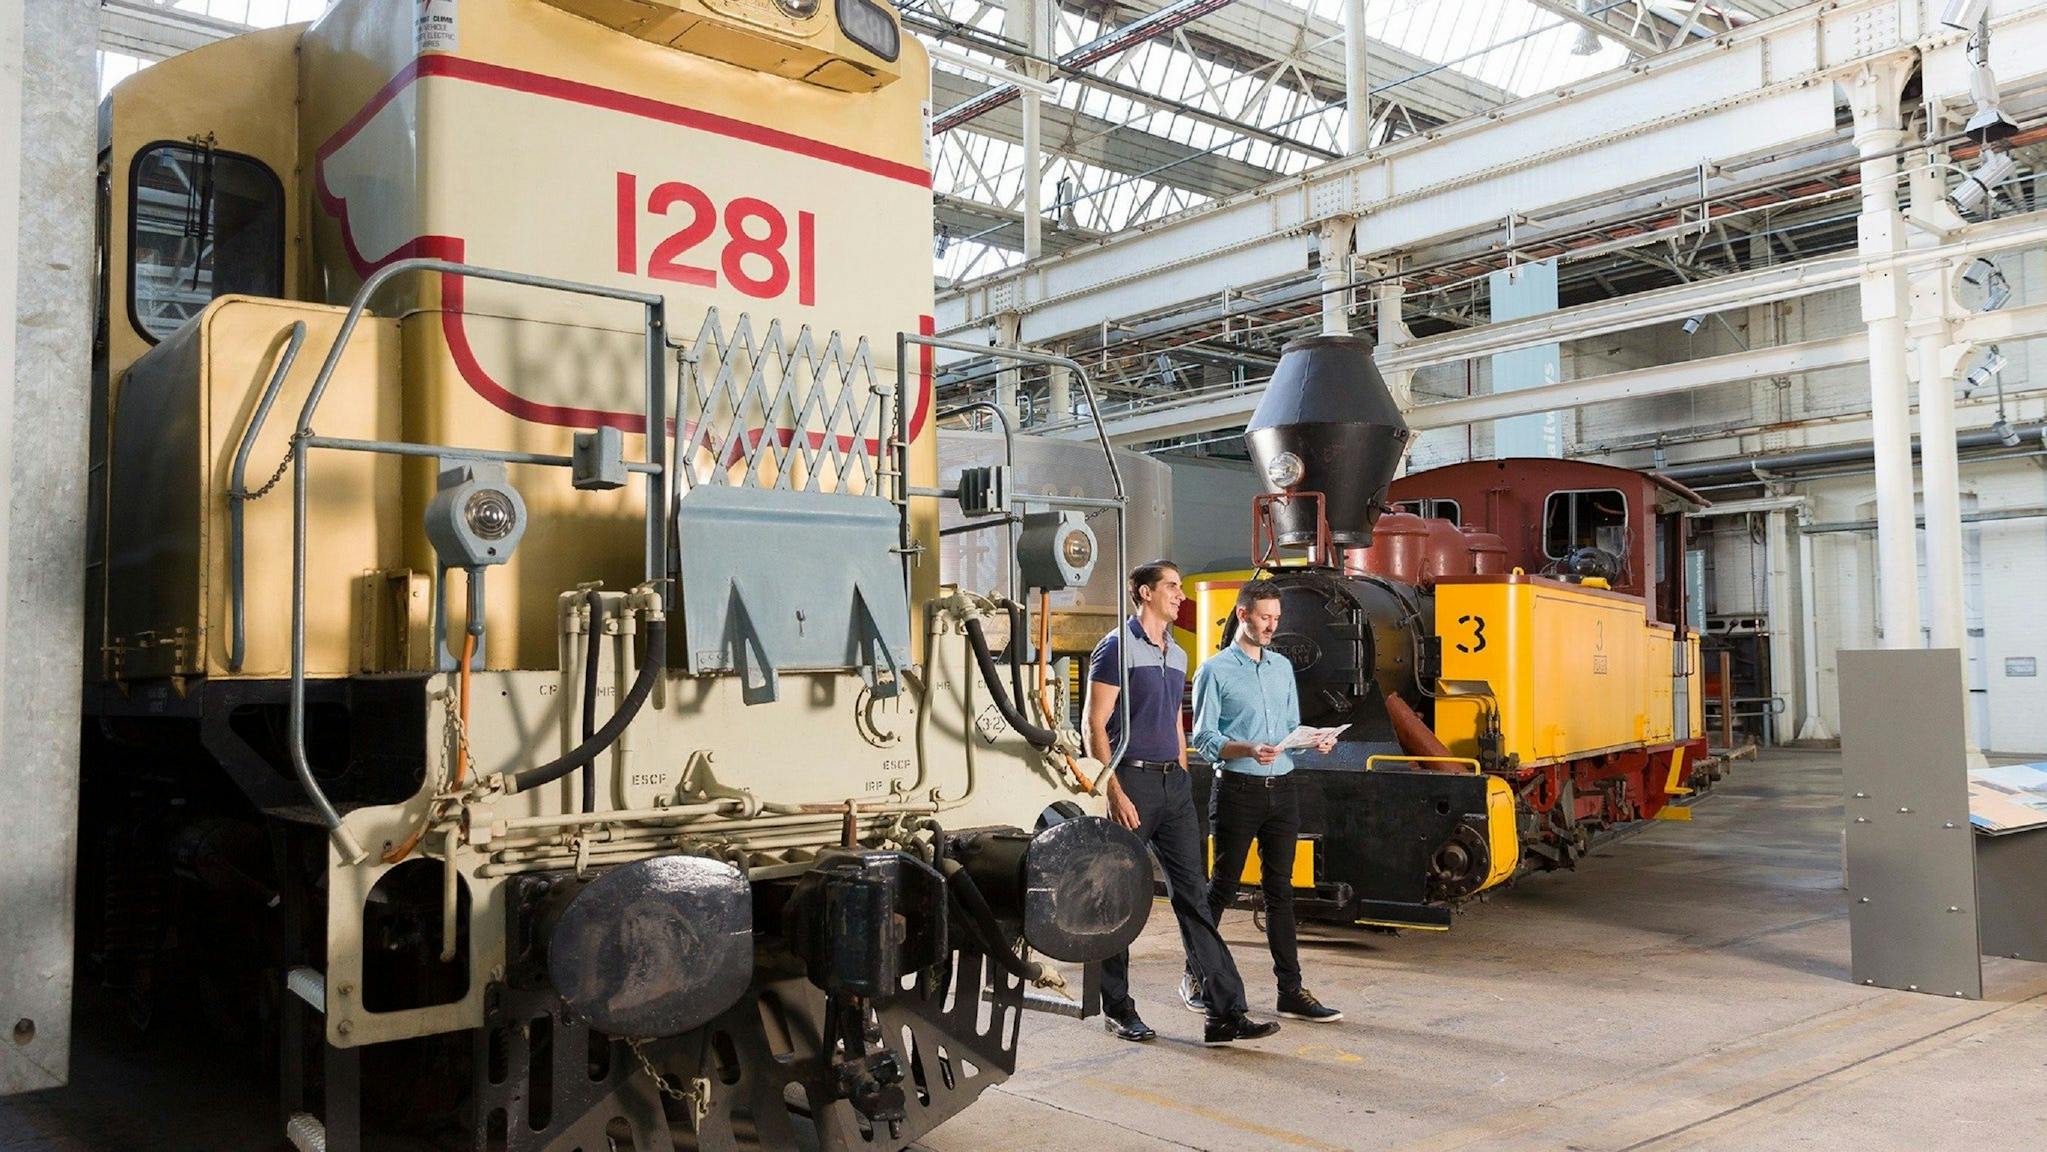 The Workshops Rail Museum